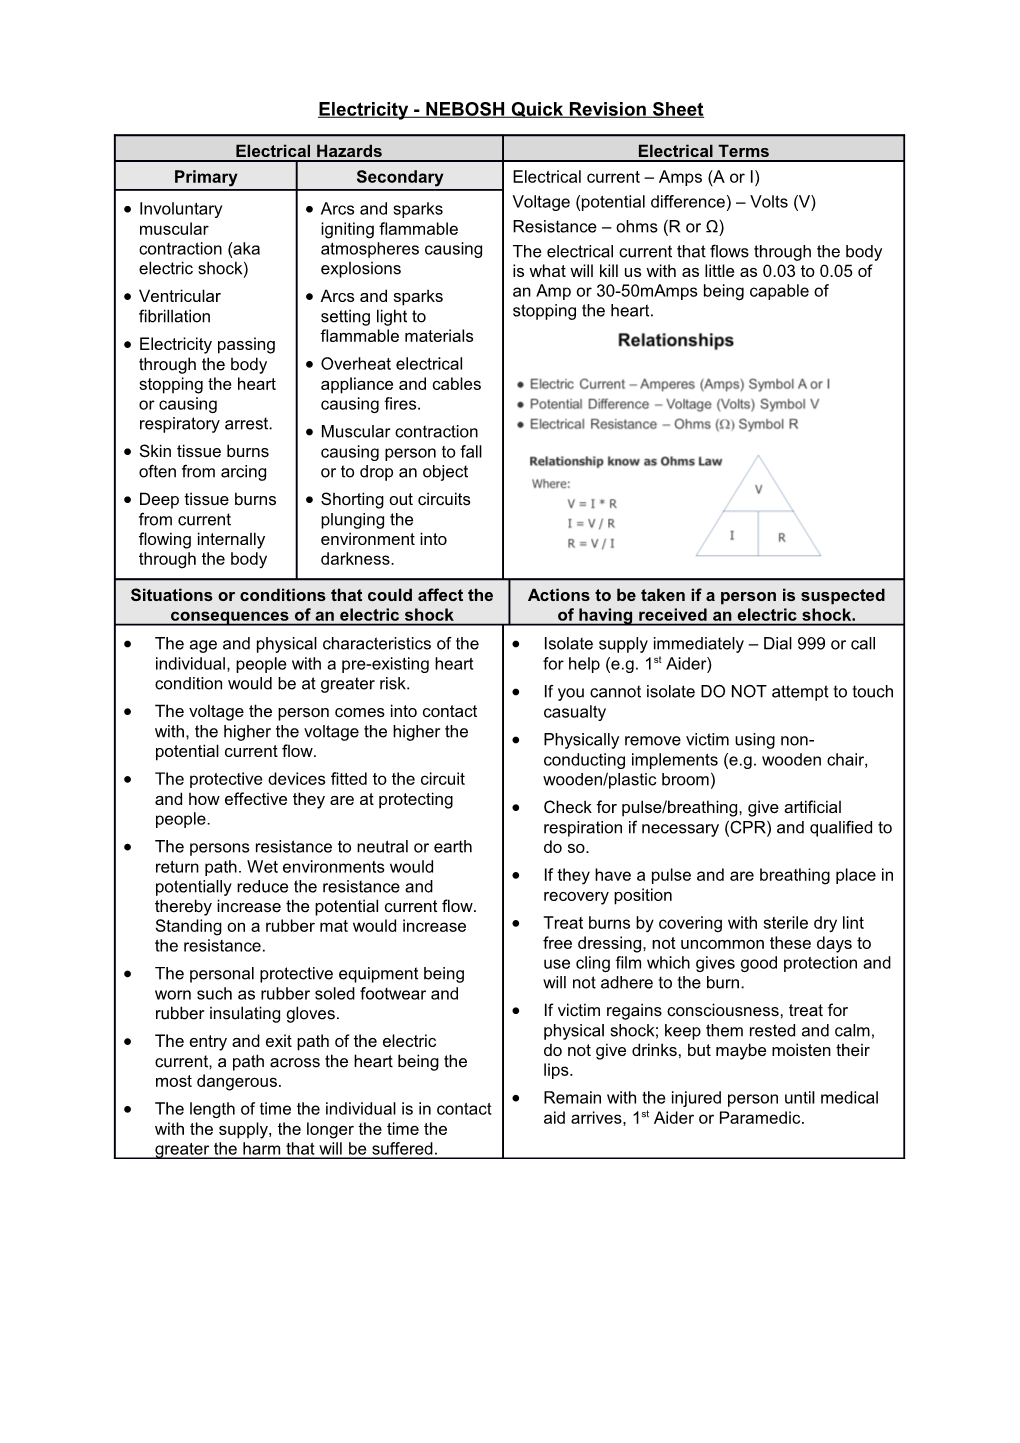 Electricity - NEBOSH Quick Revision Sheet